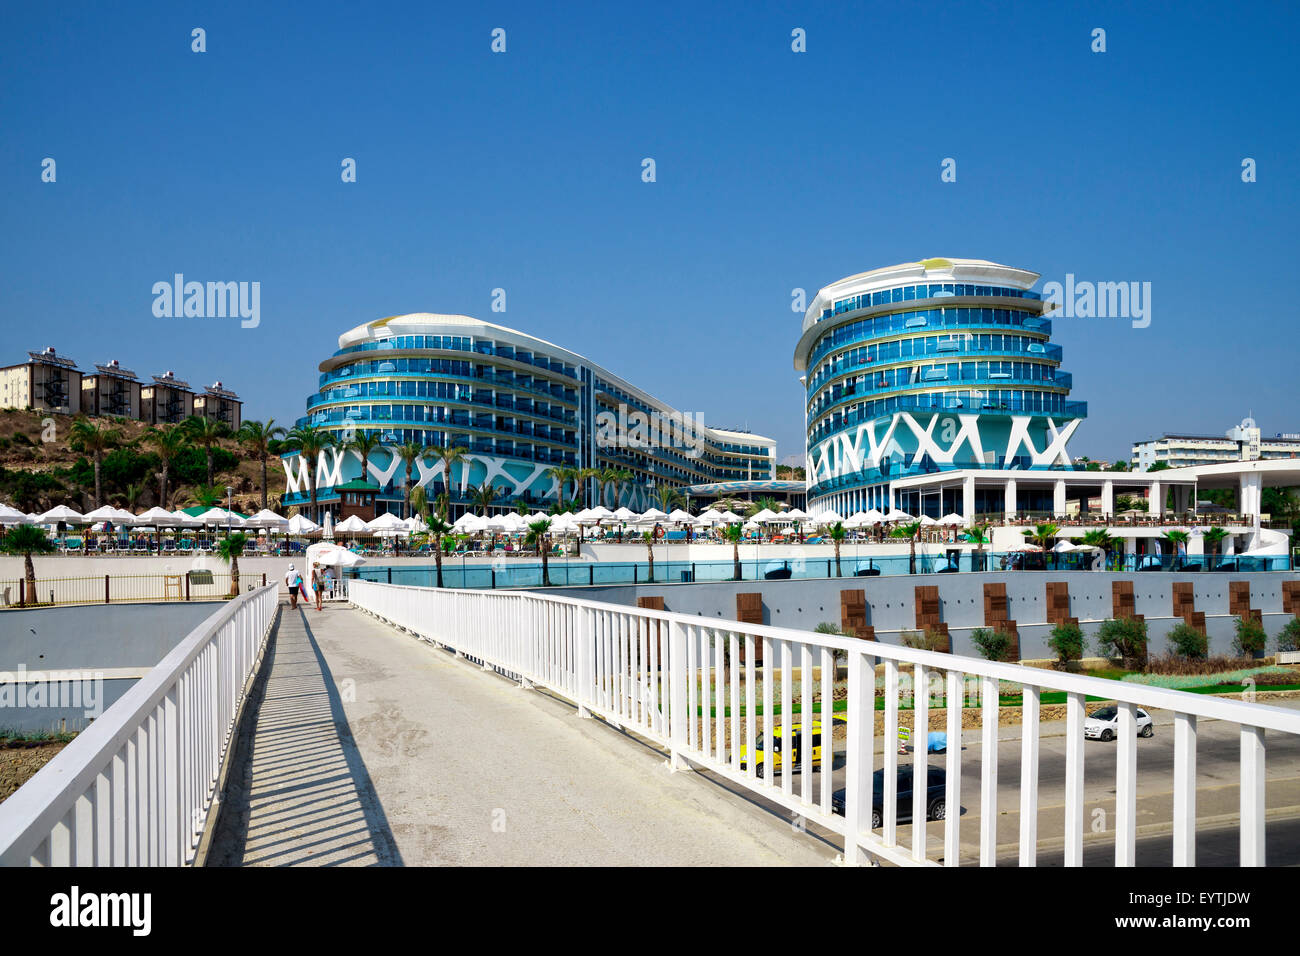 Turkey, hotel complex, Vikingen Infinity Resort & spa hotel, Alanya Stock Photo